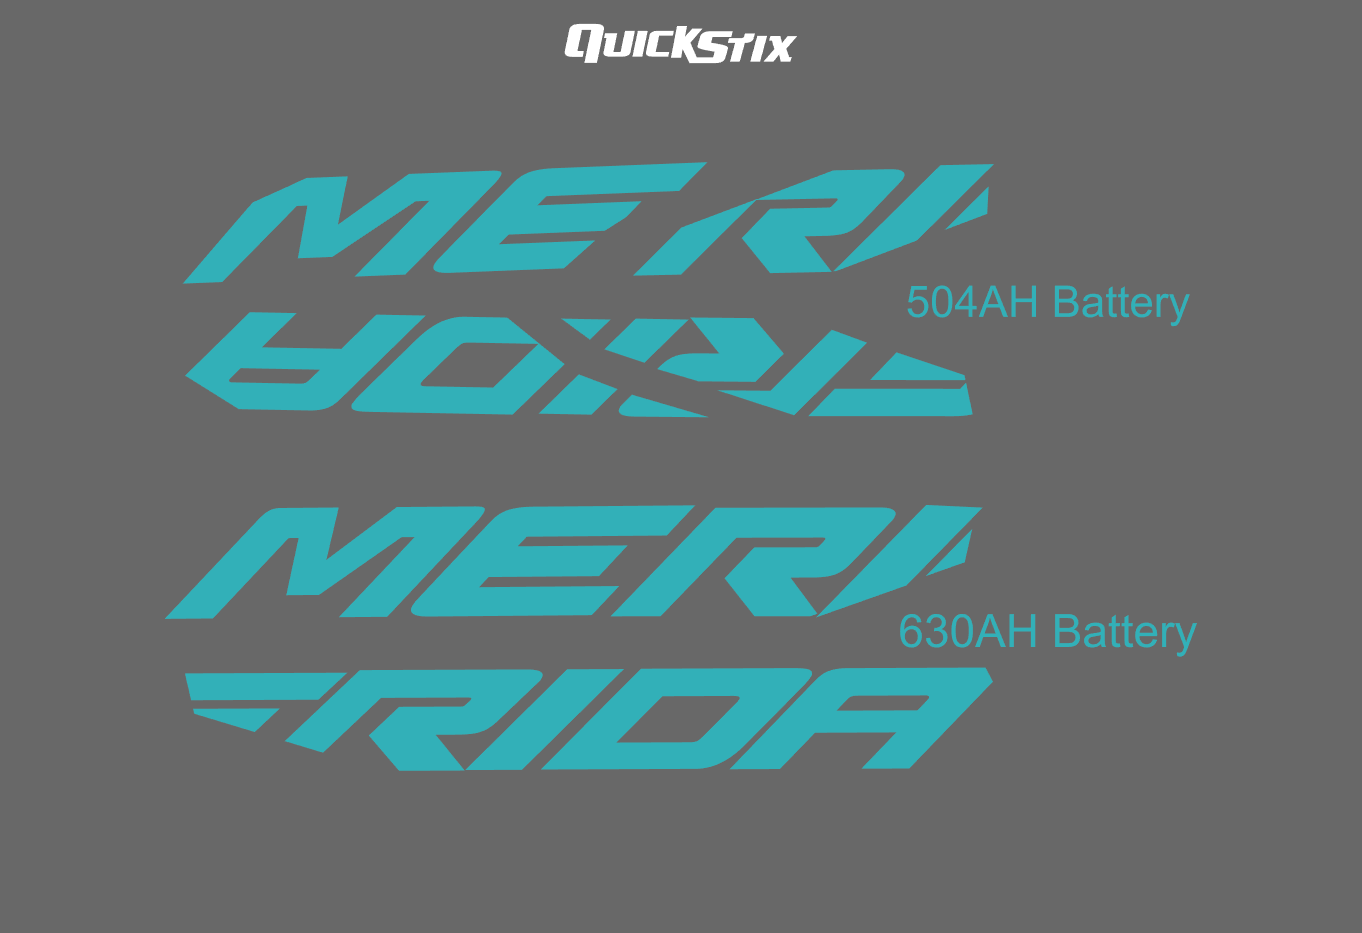 Merida/Shimano Battery decal kit.